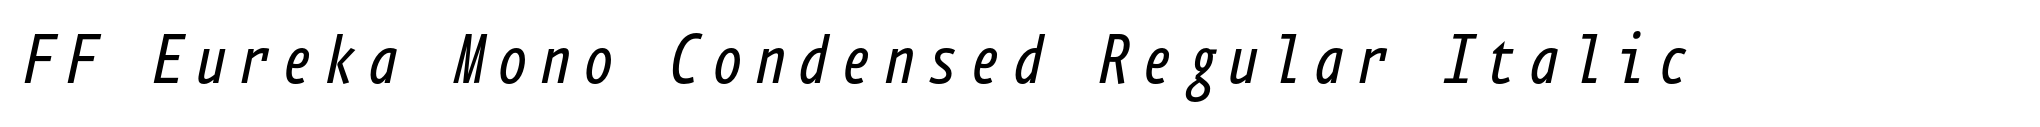 FF Eureka Mono Condensed Regular Italic image